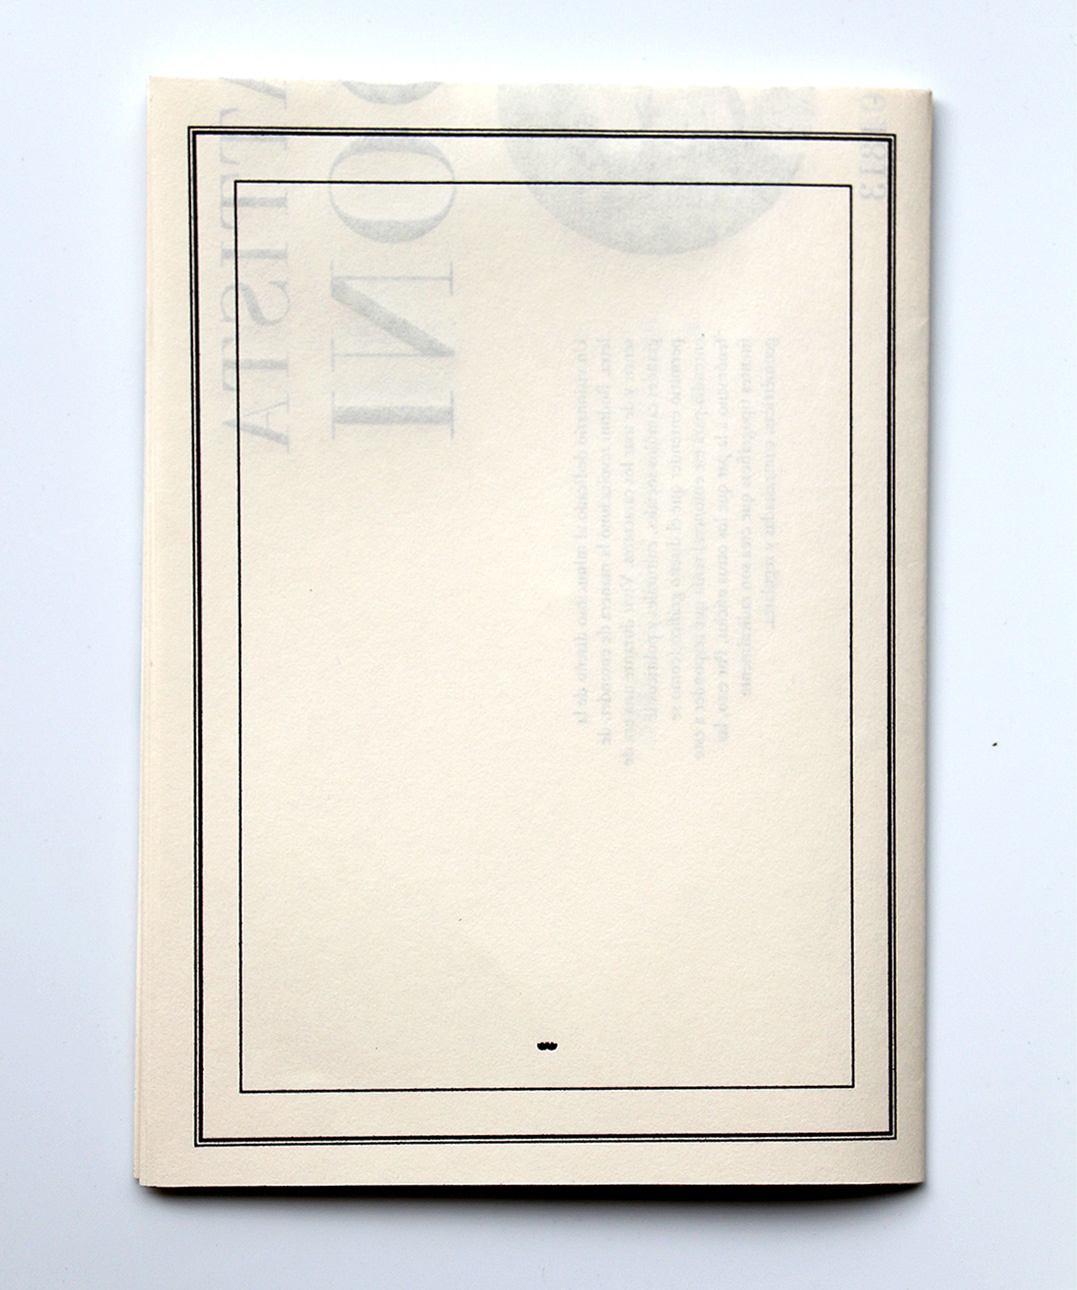 Bodoni Giambattista bodoni Typeface fanzine Plegable propalibro tipografia romanas modernas modern roman